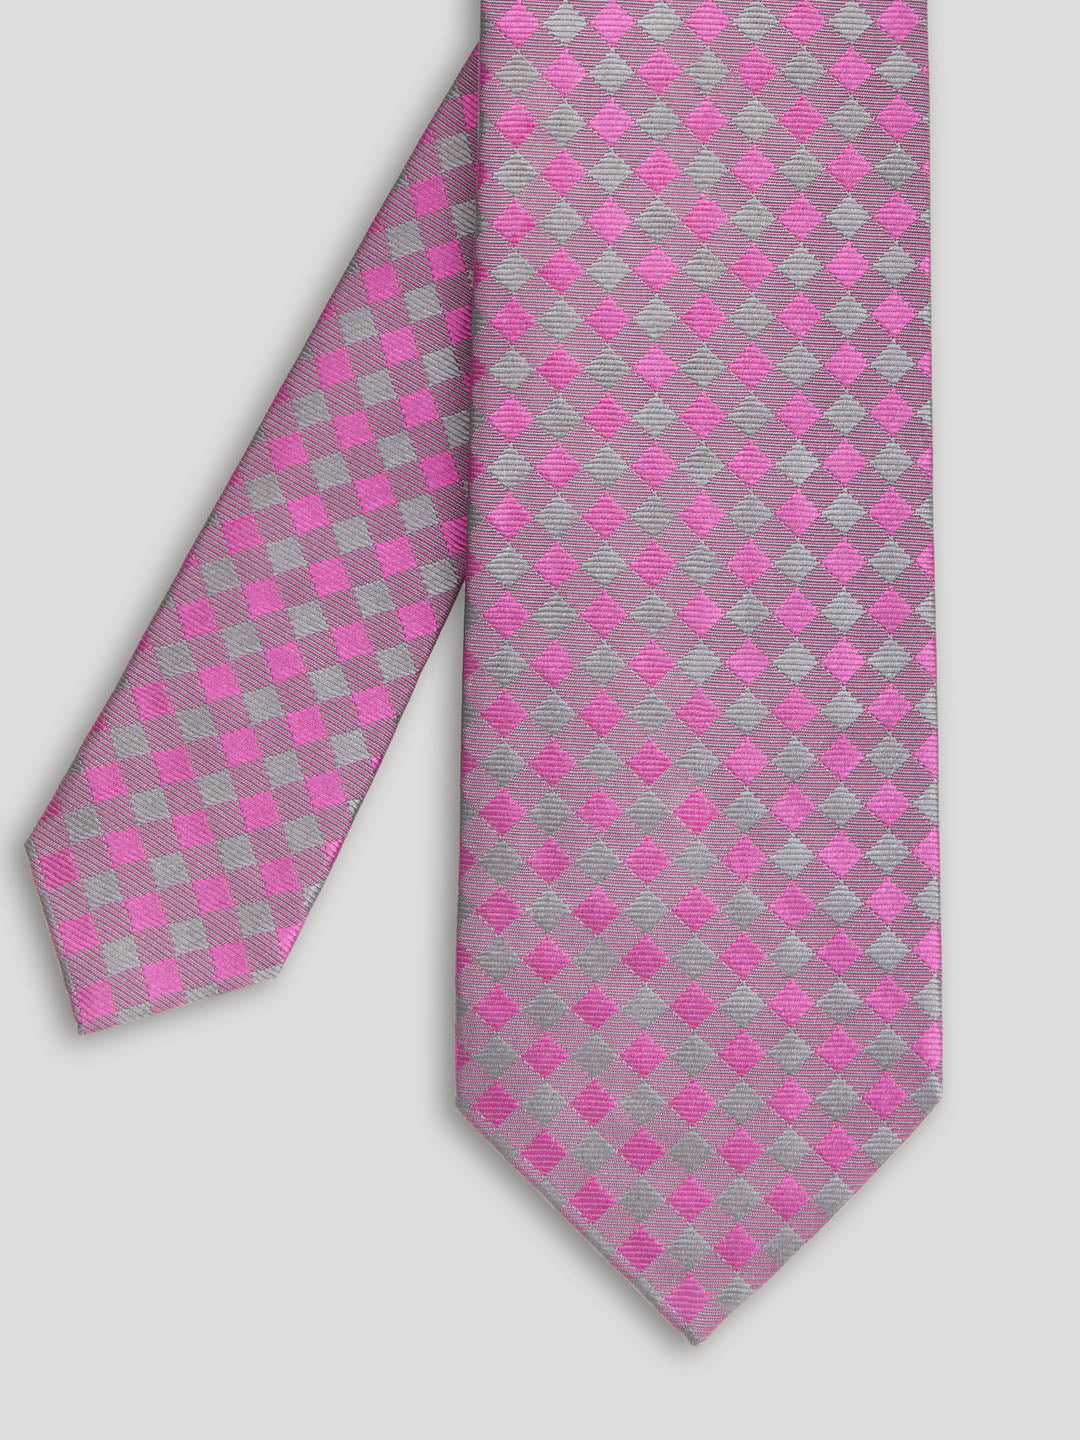 Purple, pink, and grey tie with diamond design. 